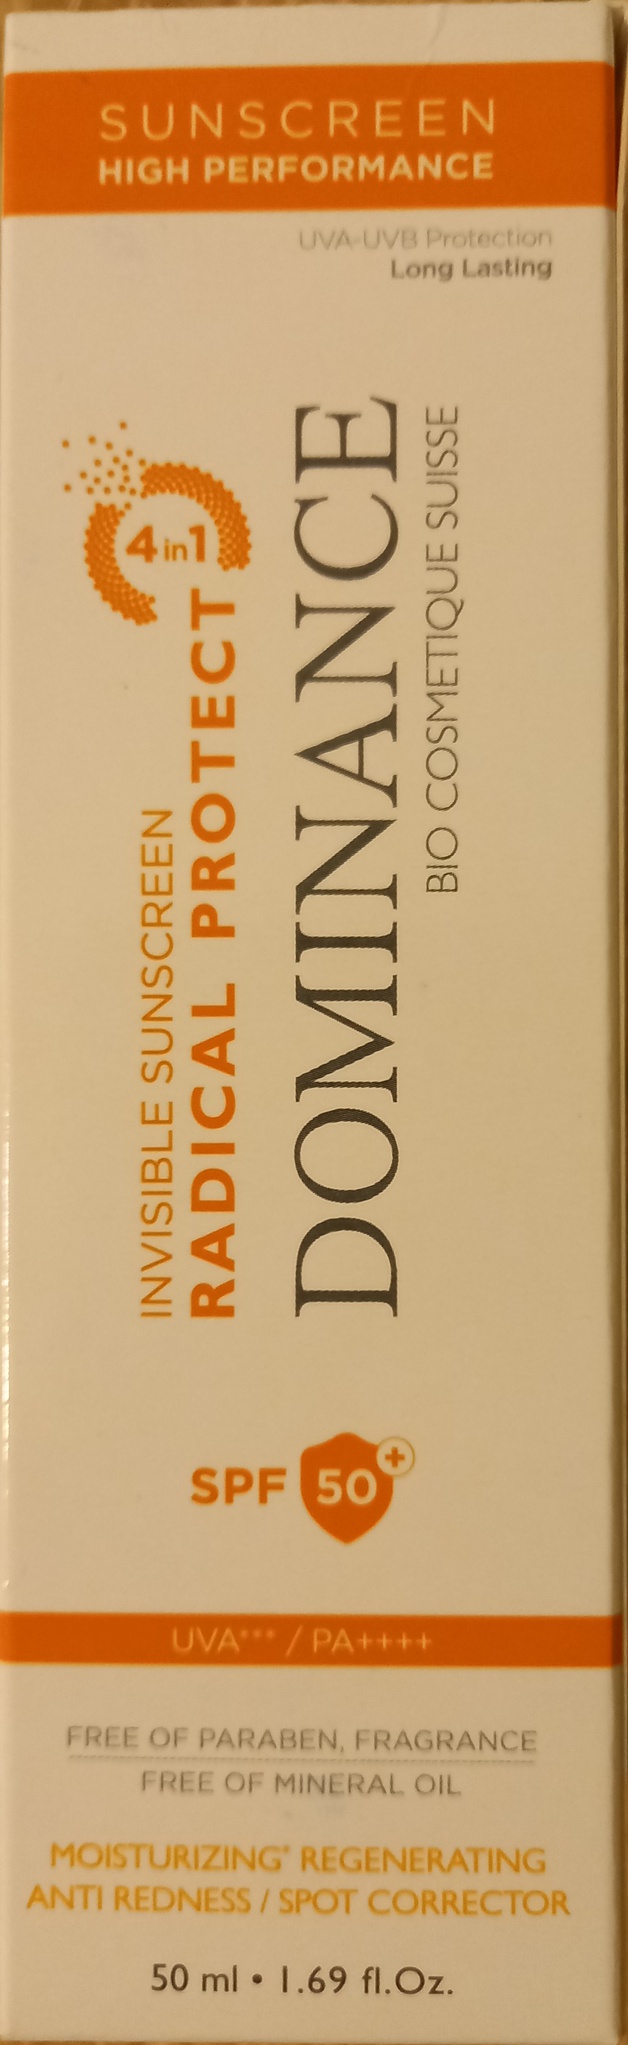 Dominance Invisible Sunscreen Radical Protect SPF50+ UVA***/PA++++